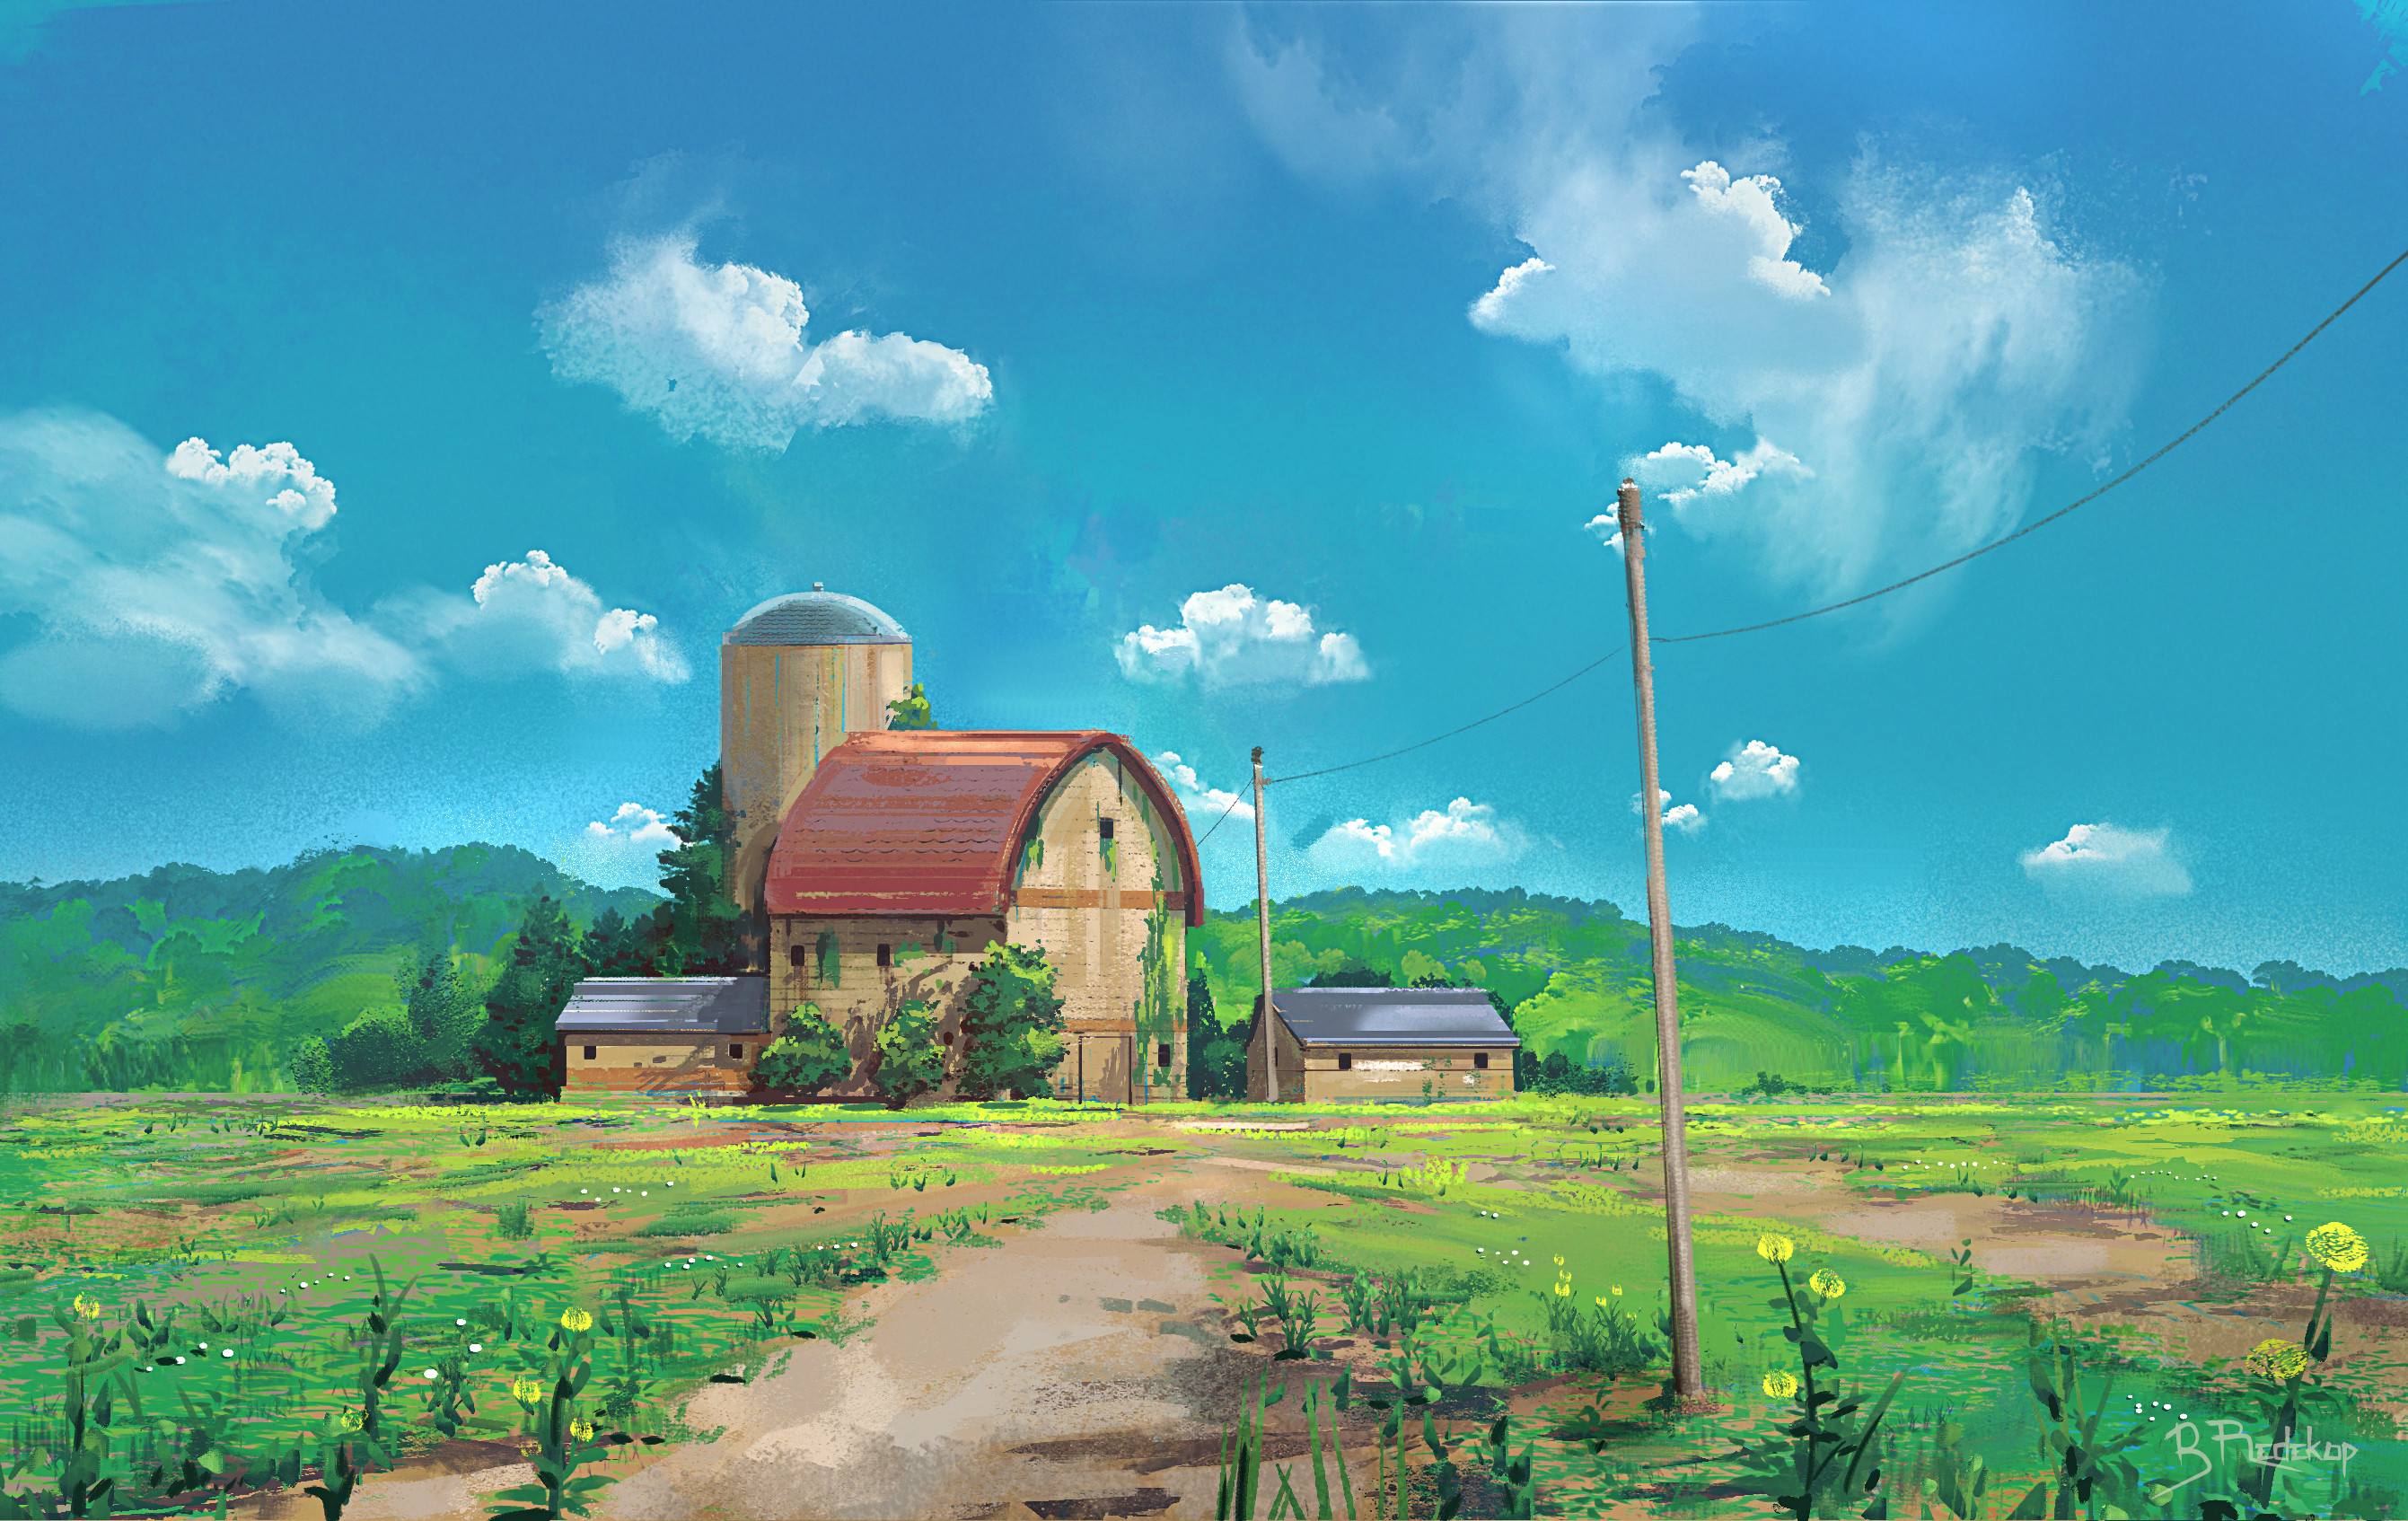 Digital Art Artwork Illustration Traditional Art Farm Landscape Clouds Nature Colorful Environment 2682x1694